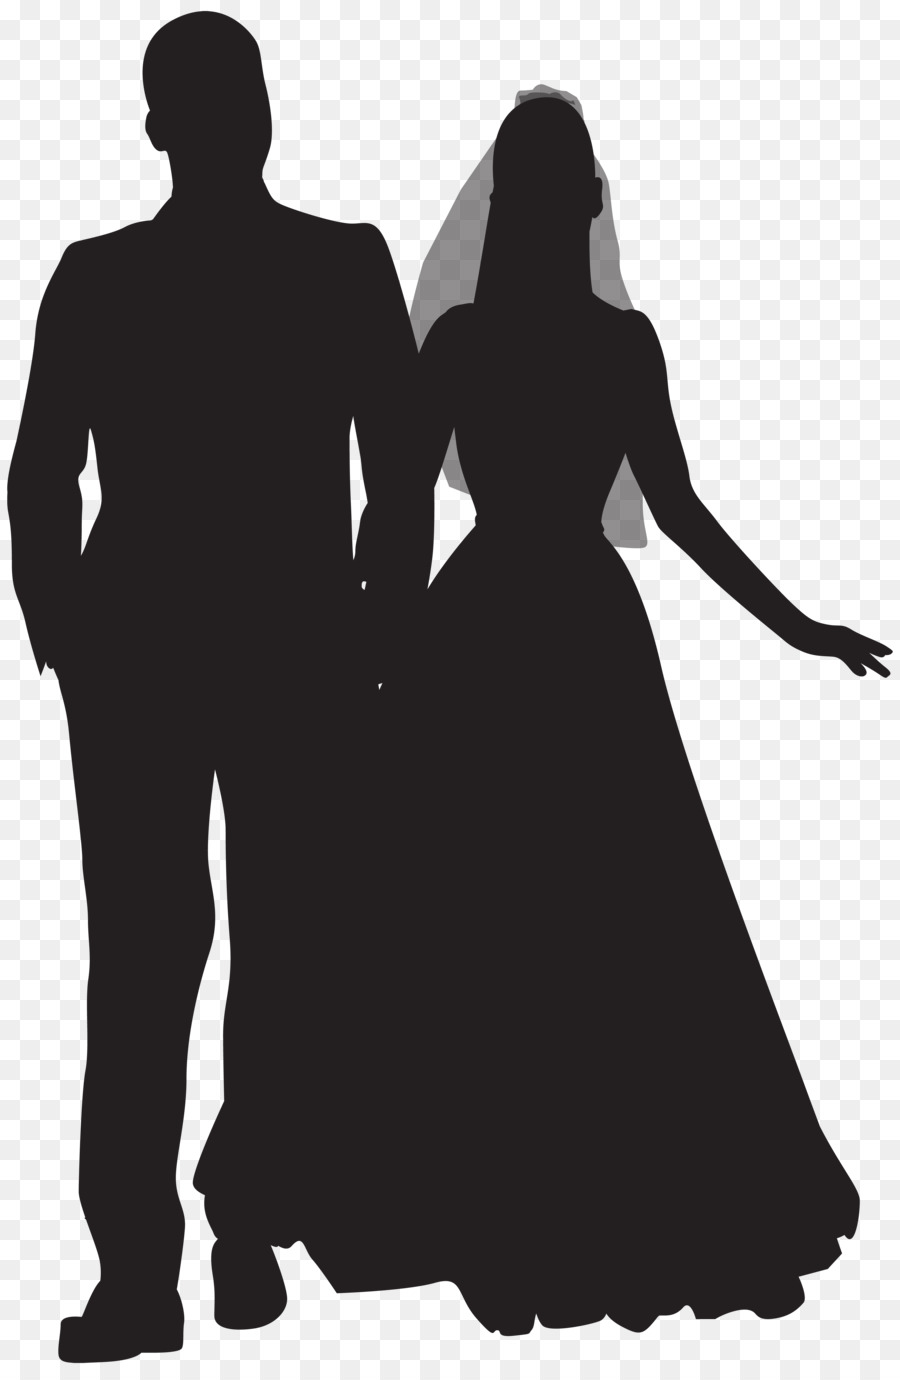 Silhouette Wedding couple Clip art - couple png download - 5239*8000 - Free Transparent Silhouette png Download.